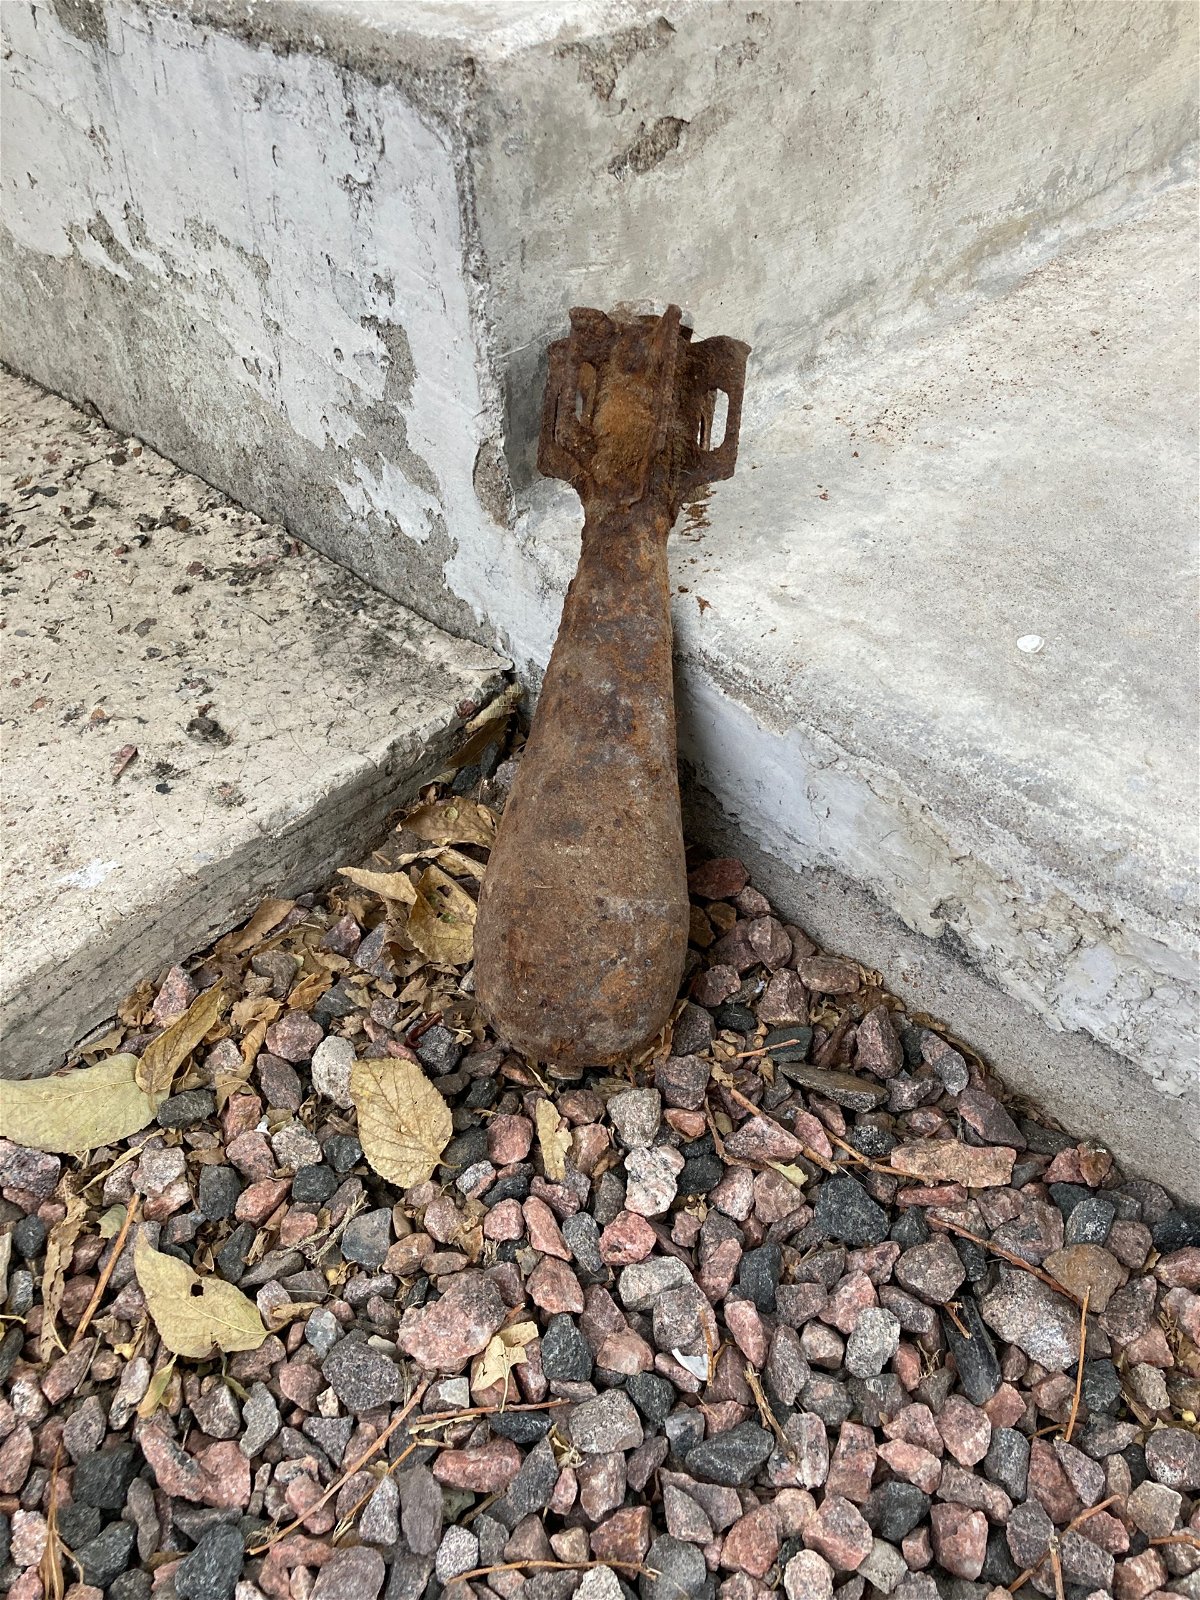 Photo of Military explosive found in Pueblo.